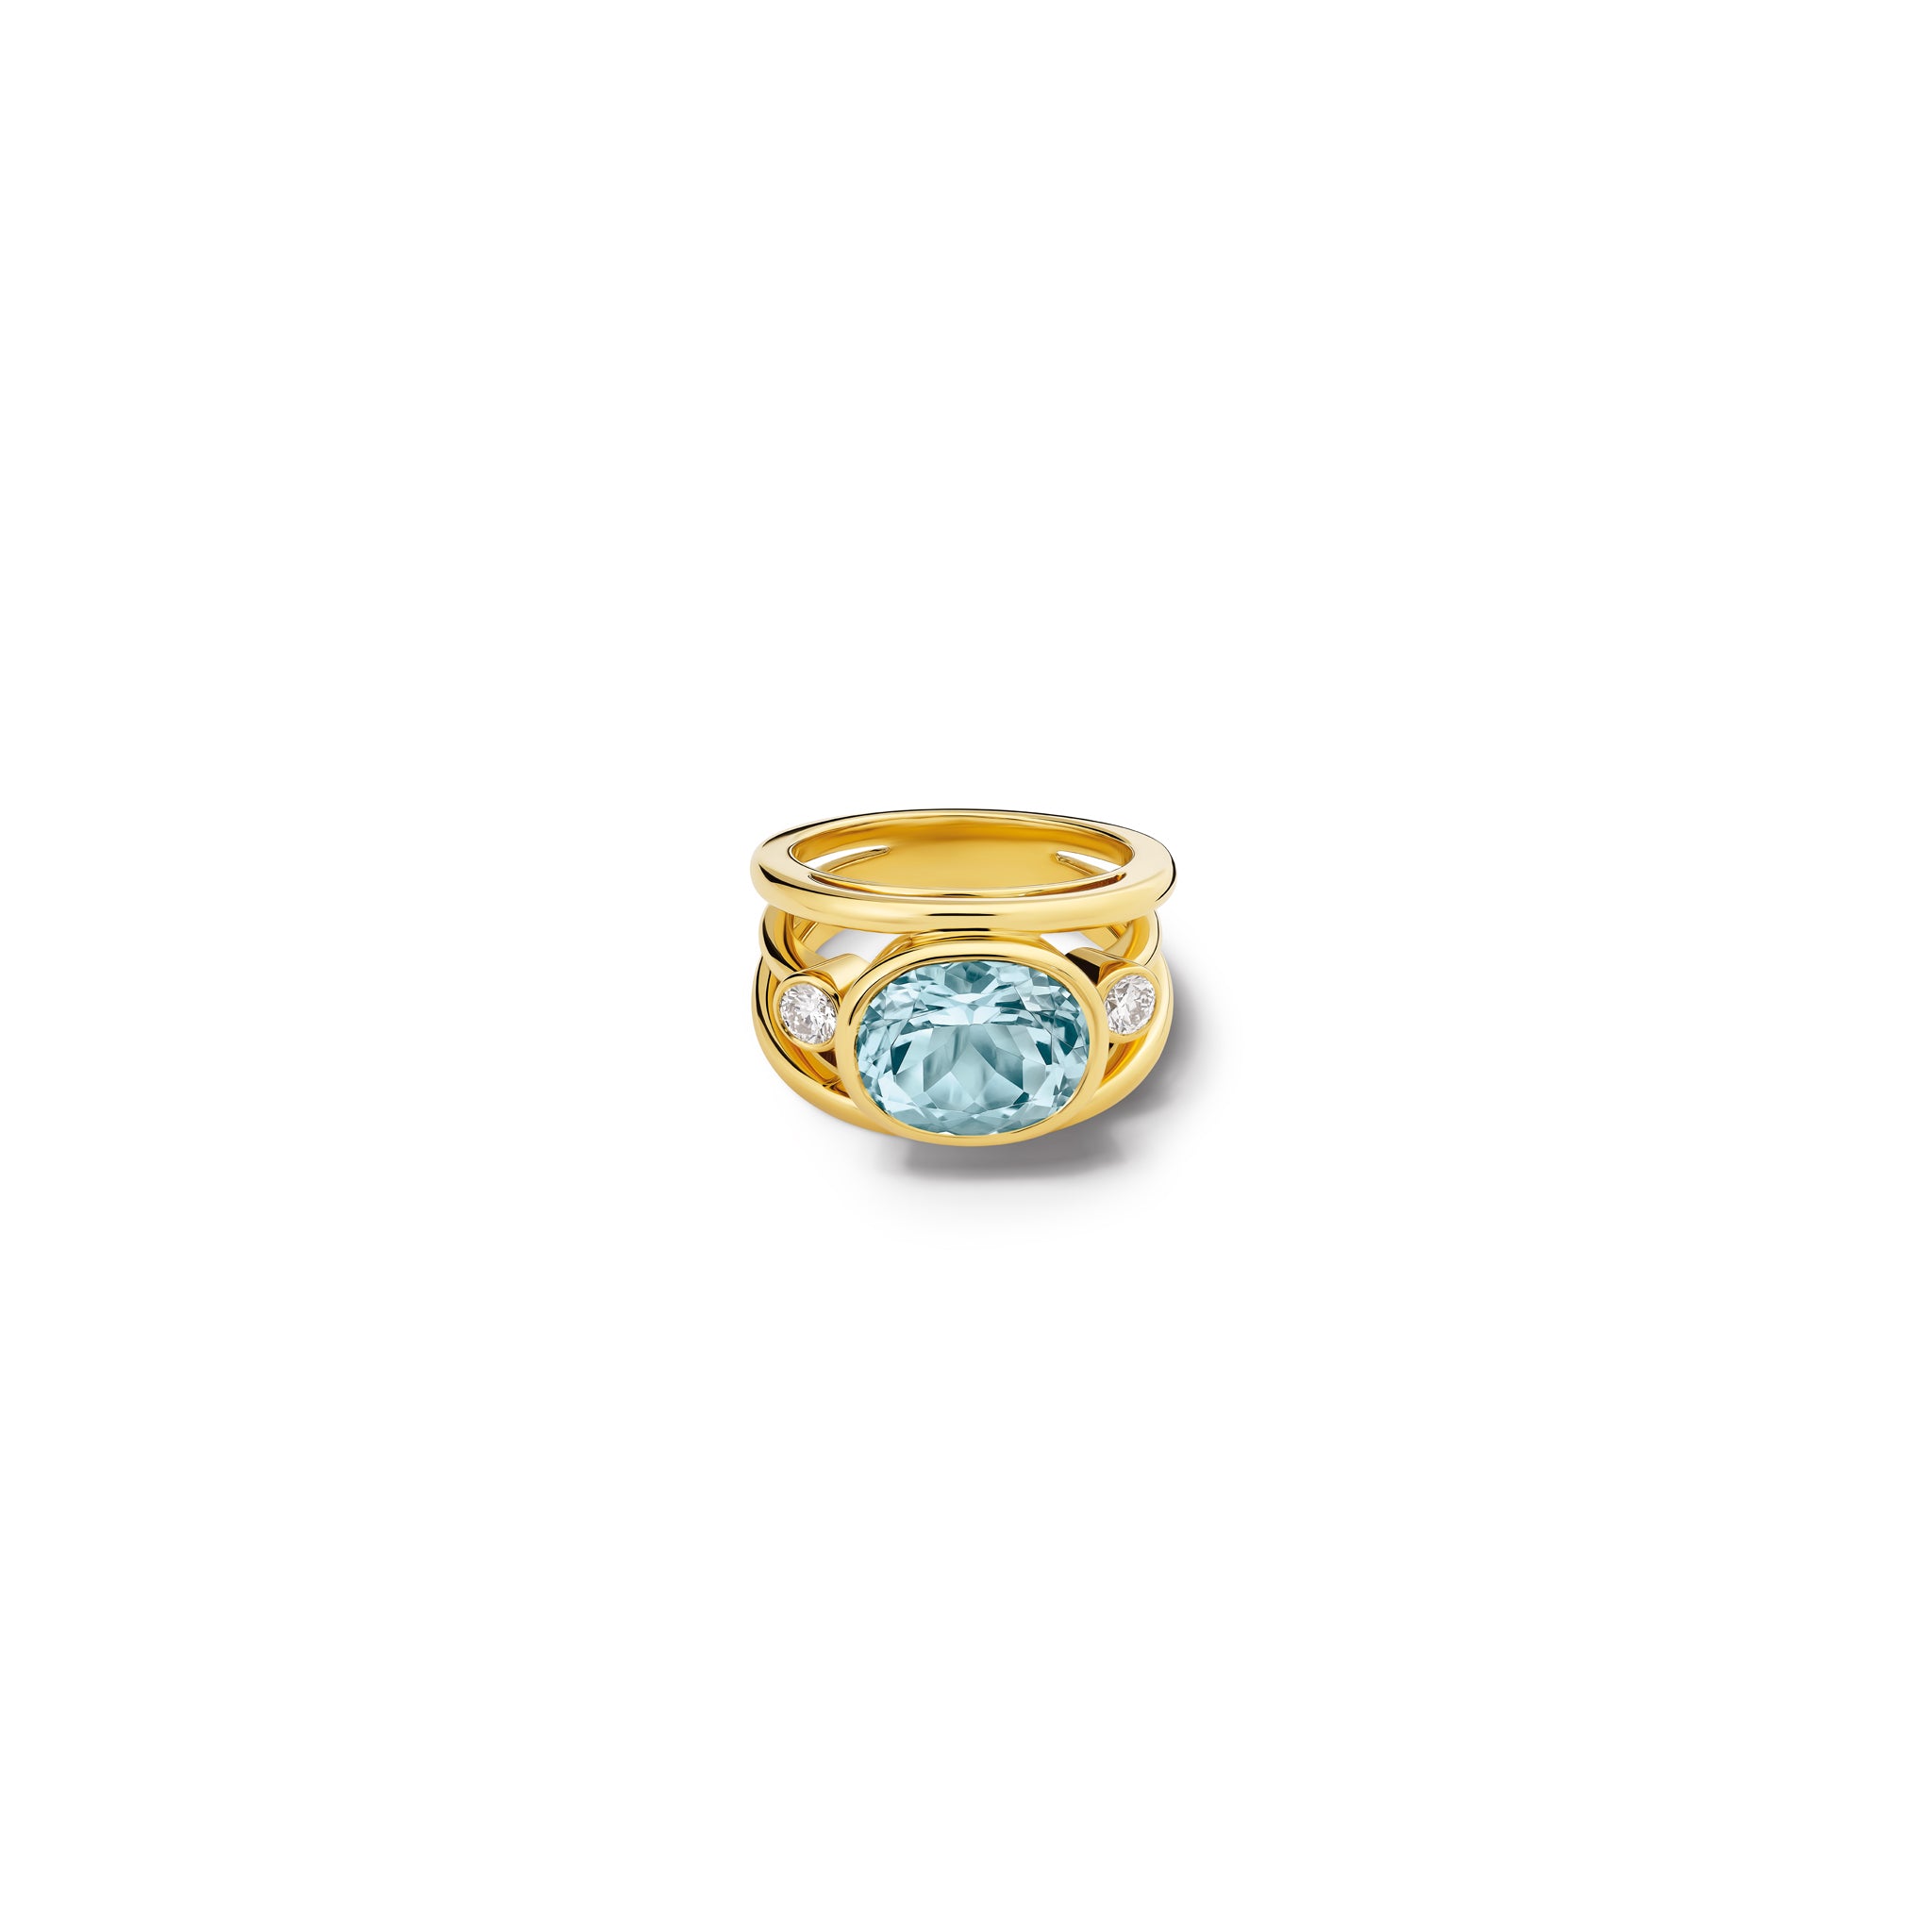 Aeneus Roman Ring 18ct Yellow Gold - Aquamarine & Diamond